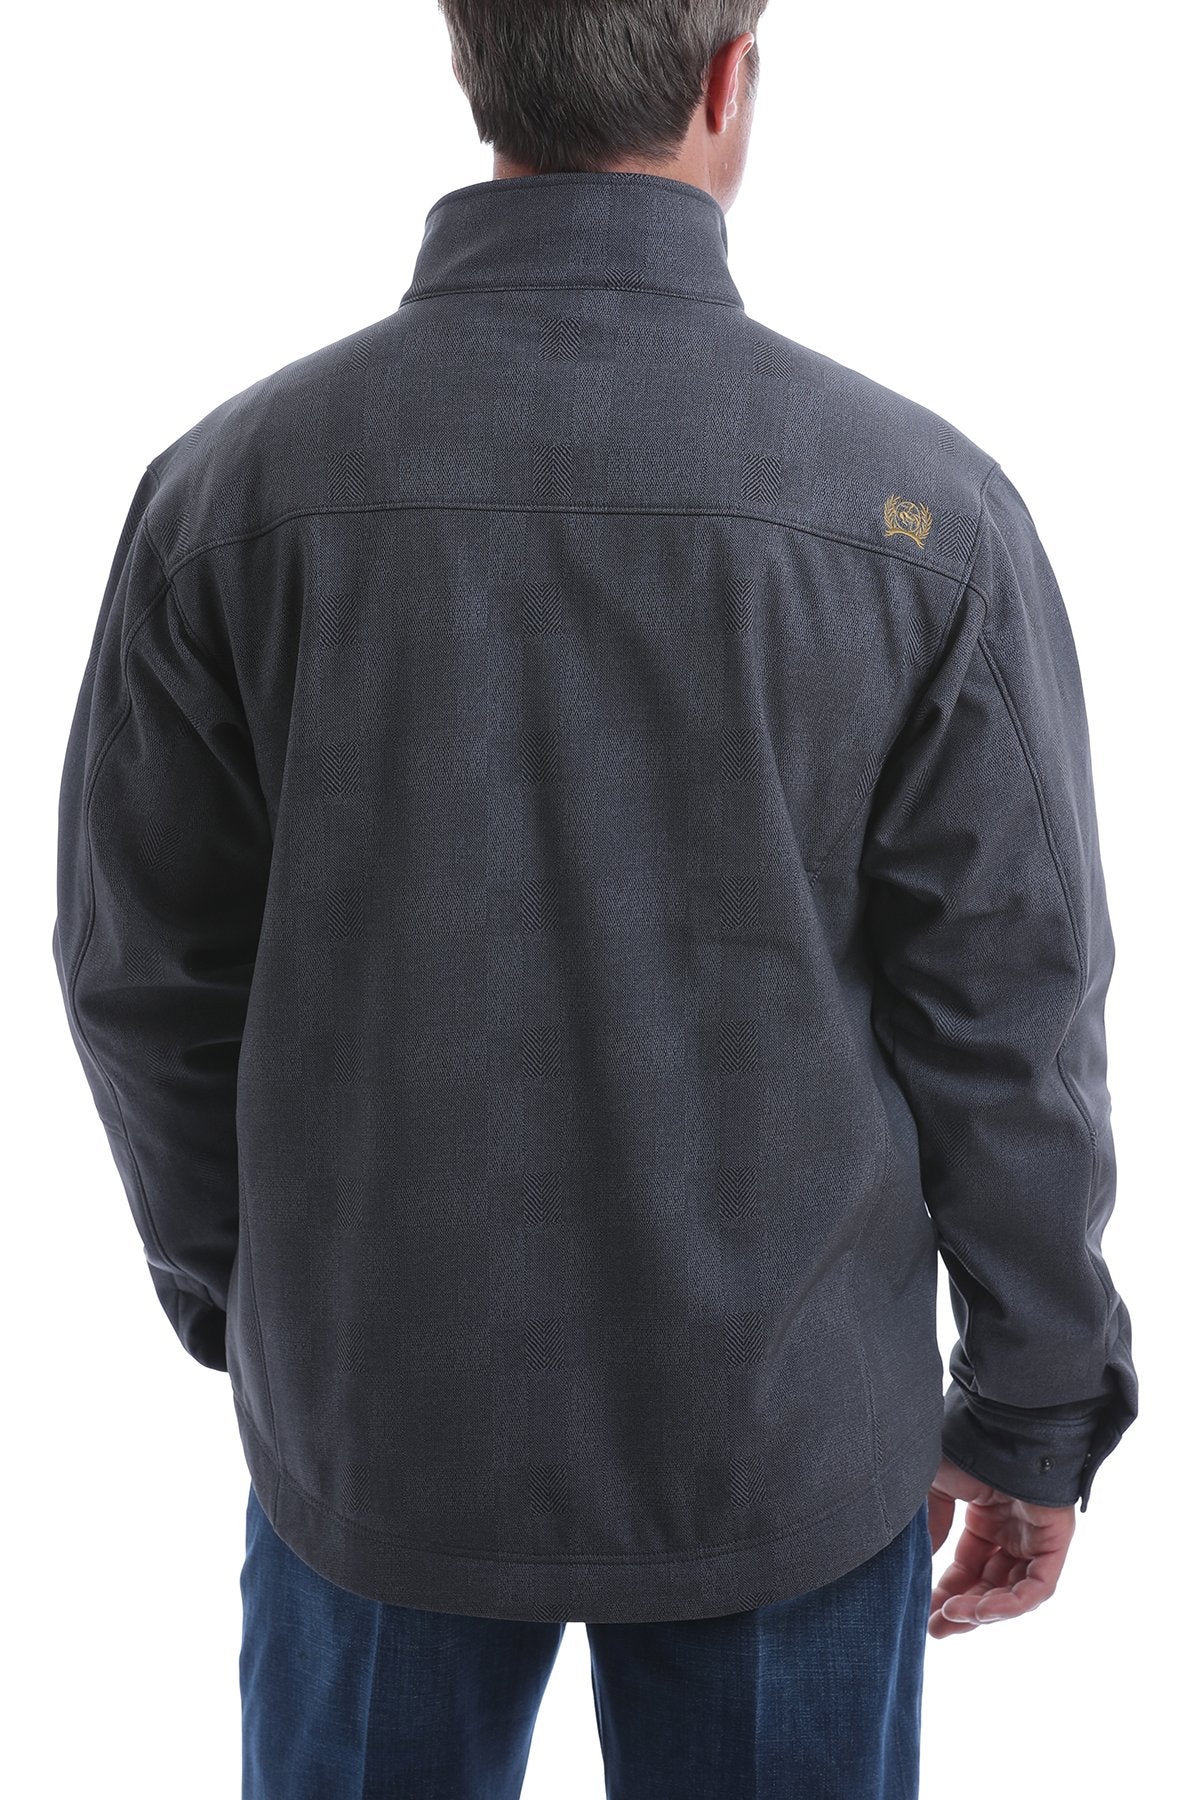 Cinch Mens Printed Bonded Jacket - Charcoal/Tobacco